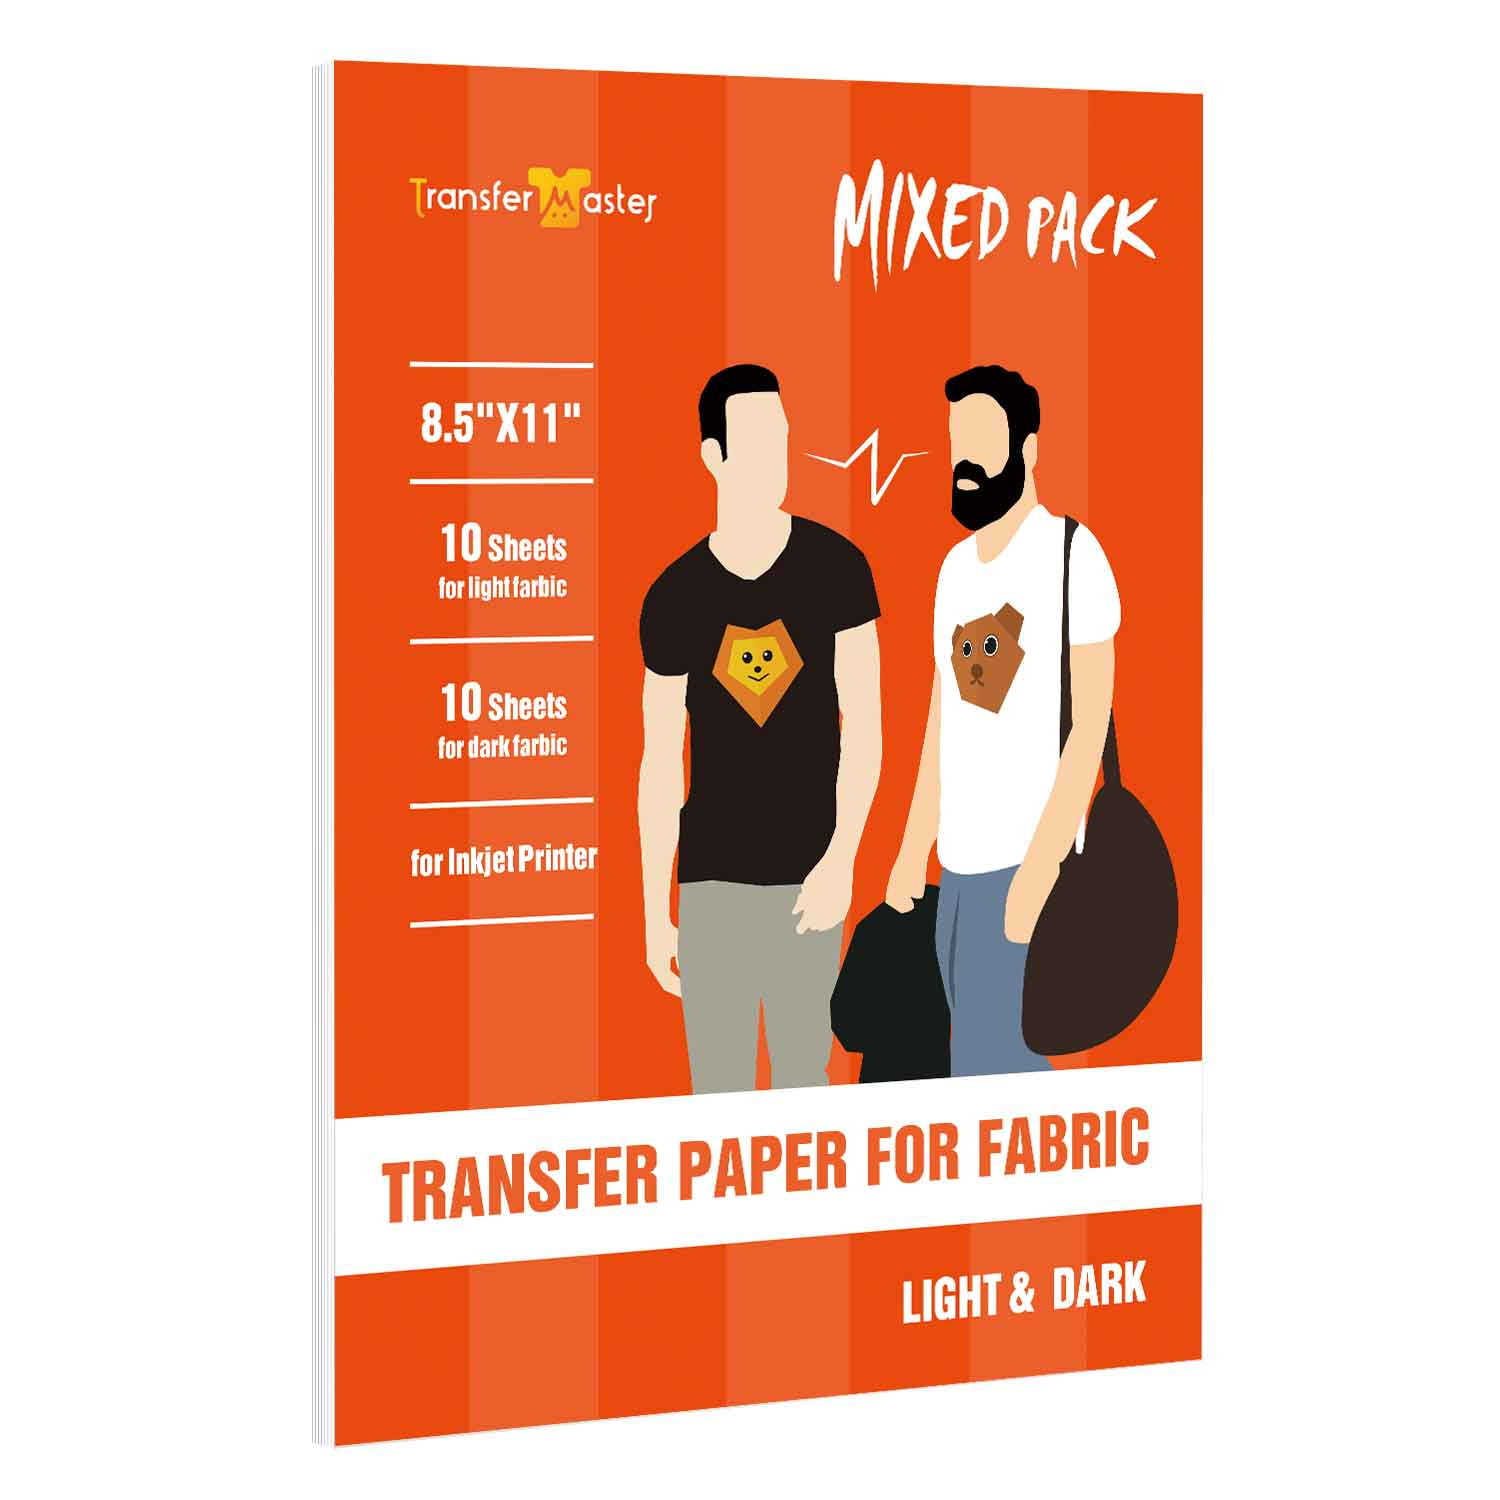 TransOurDream A4* 20Sheets Heat Iron on Transfer Paper Vinyl for Light &  White Fabrics T-shirts Inkjet Printer